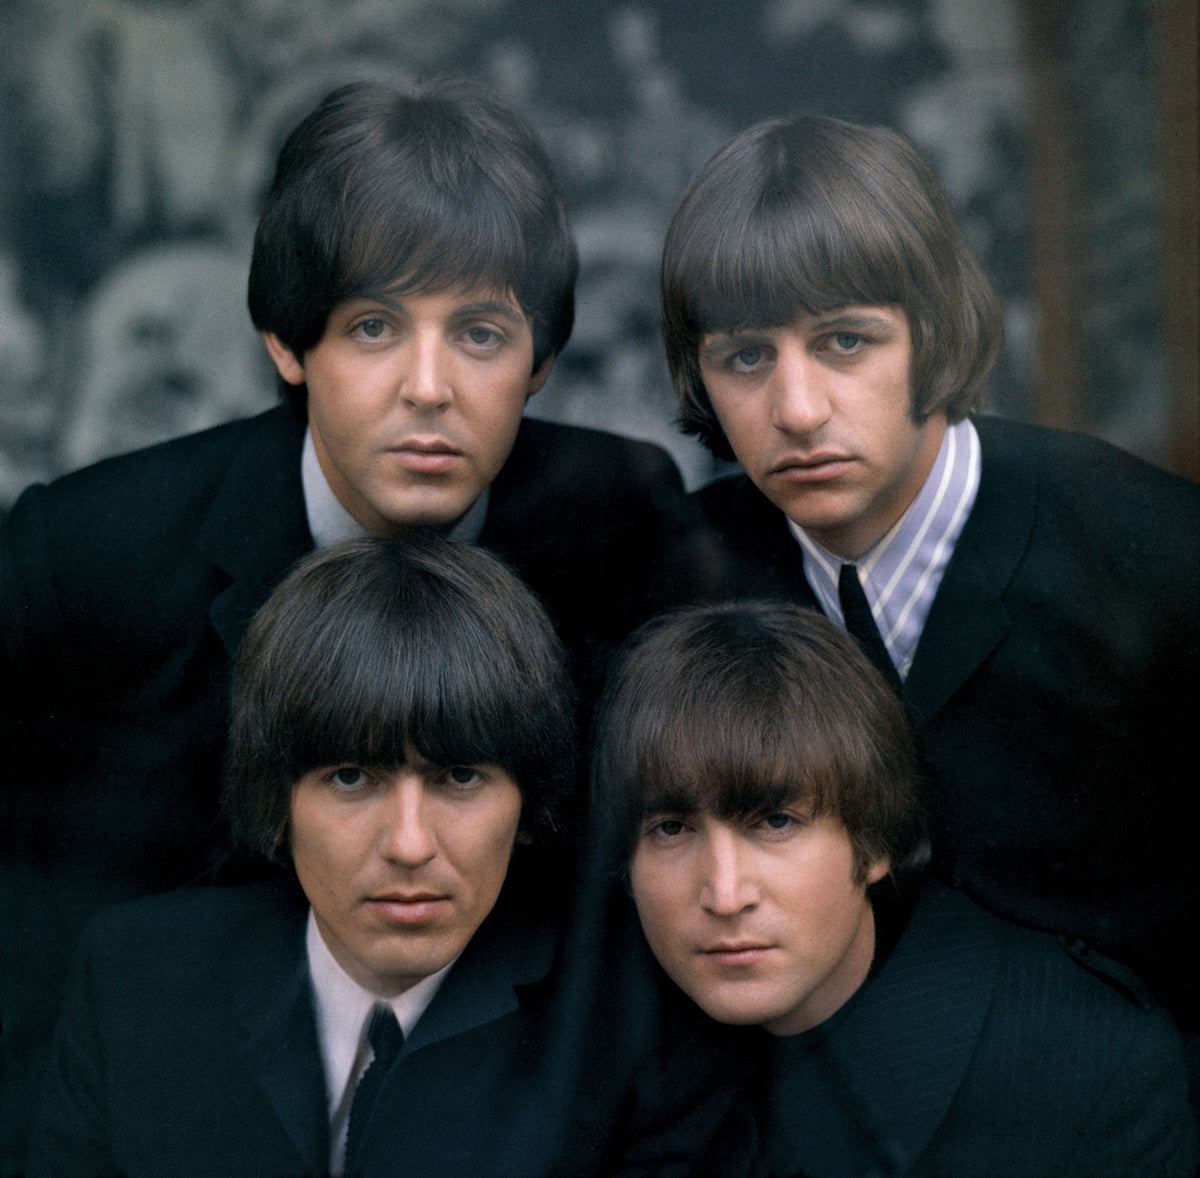 The Beatles Memorabilia: History, Love, & Music